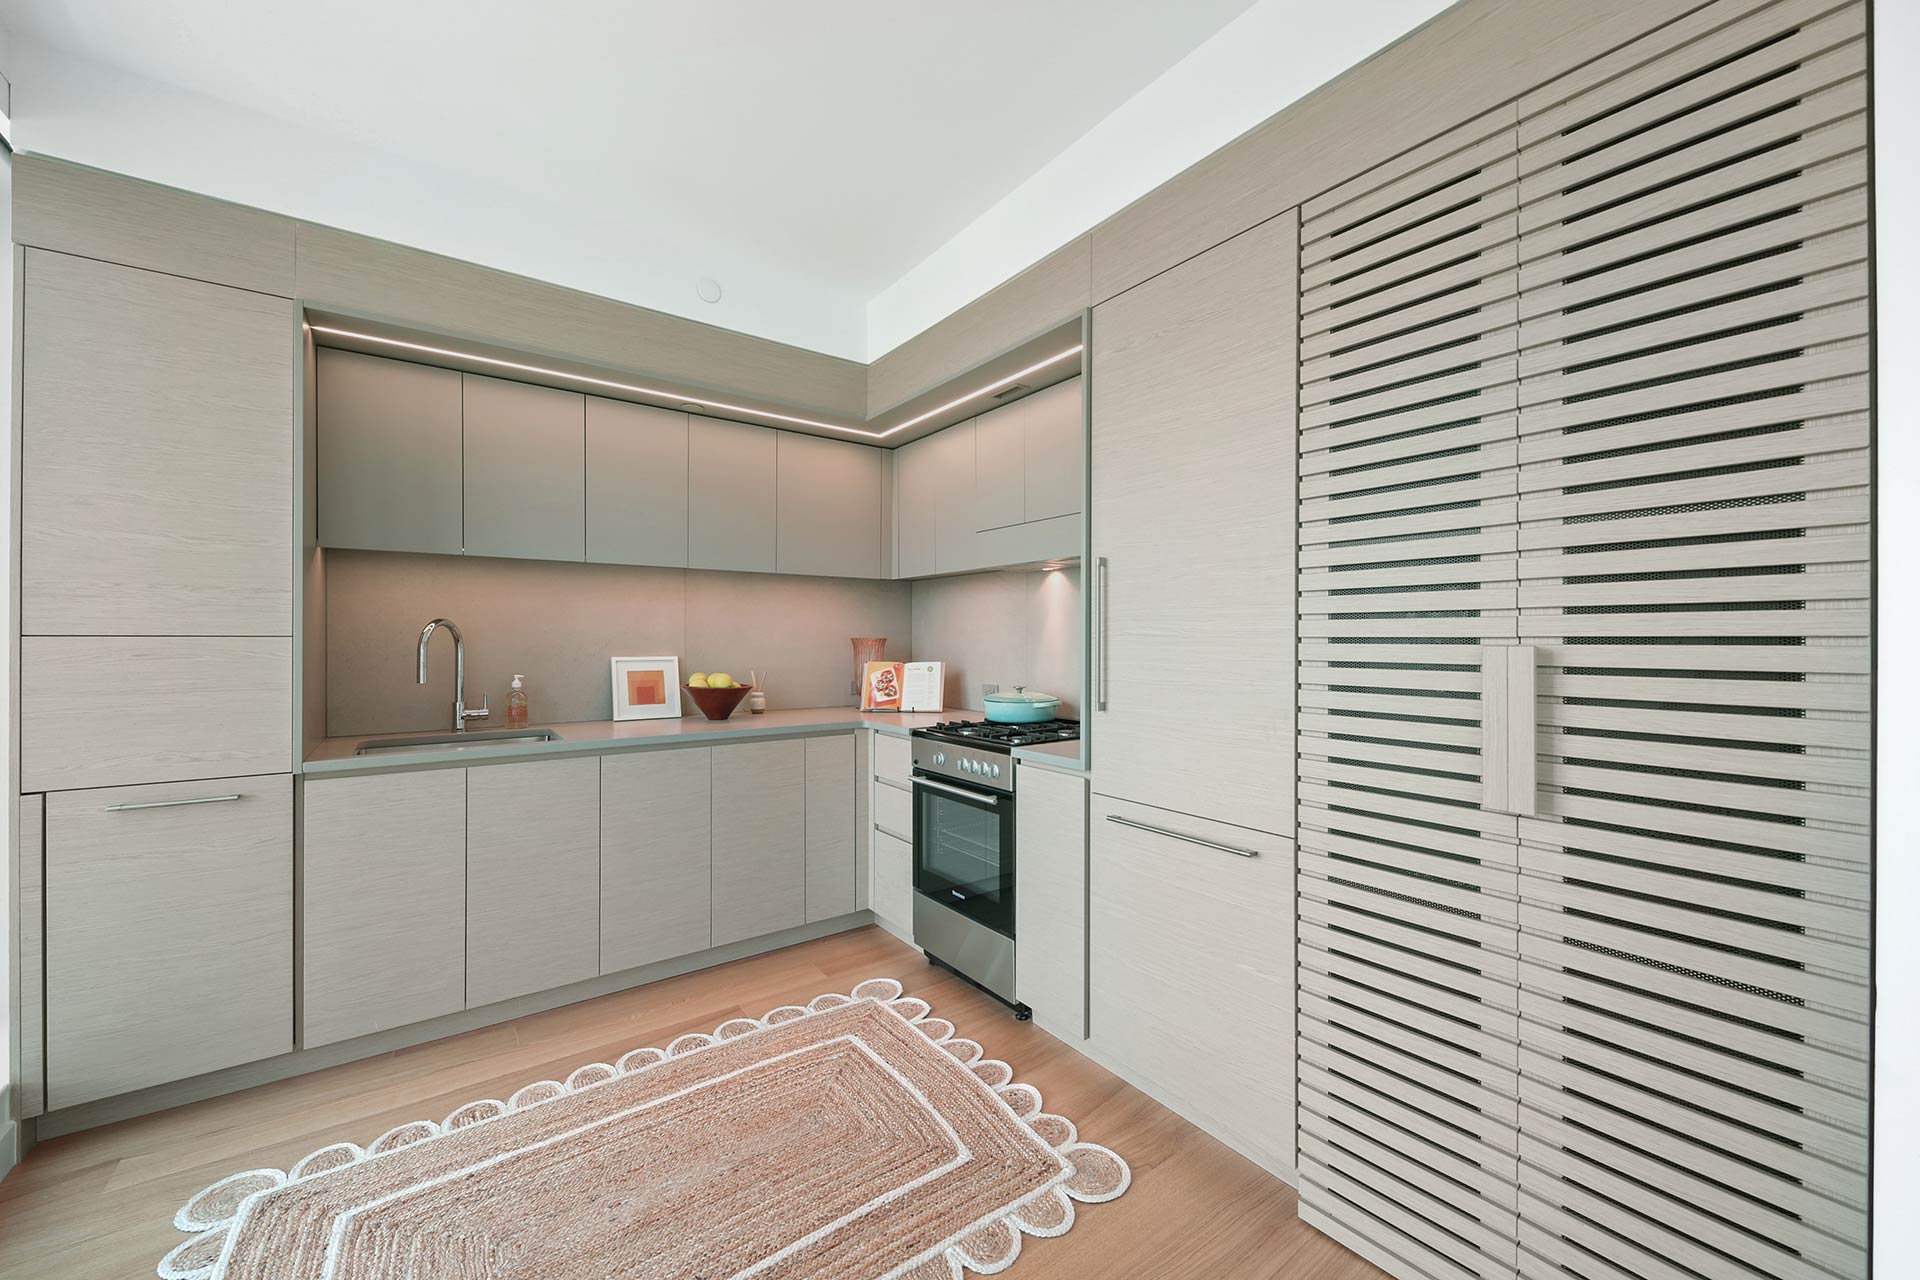 Modern kitchen with elegant grey cabinets and warm wooden flooring